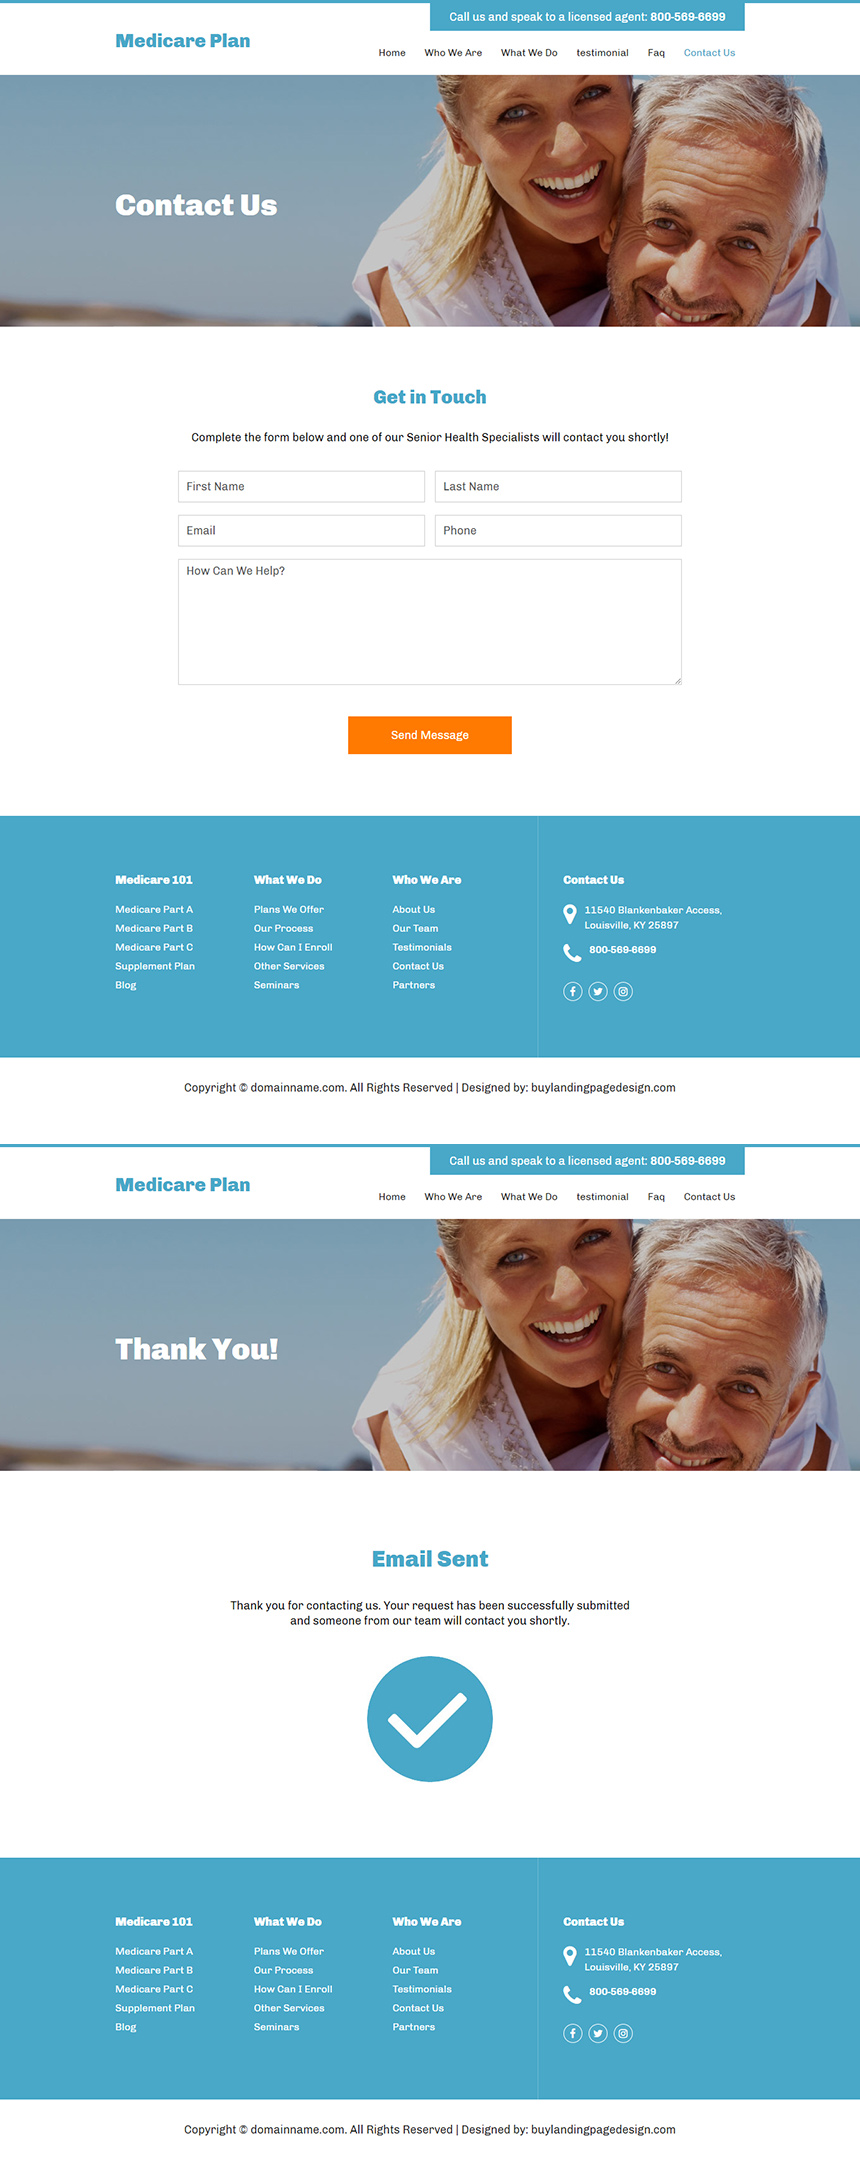 medicare supplement insurance company responsive website design